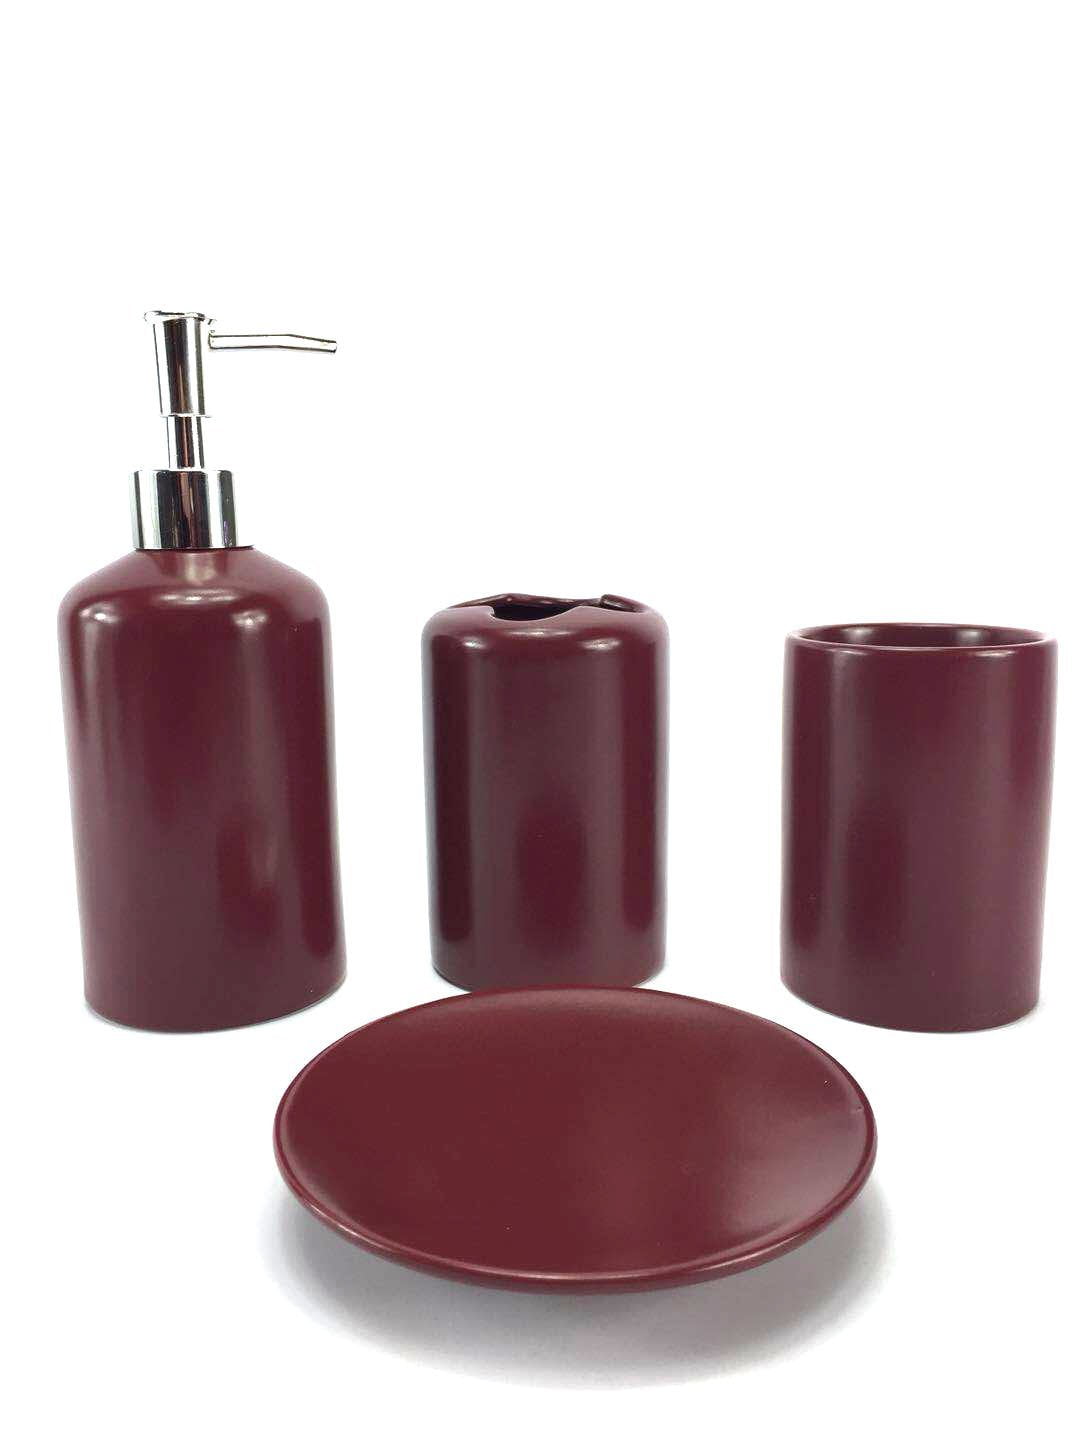 Dark Brown Ceramic Soap Dish Soap Dispenser Toothbrush Holder & Tumbler Set 